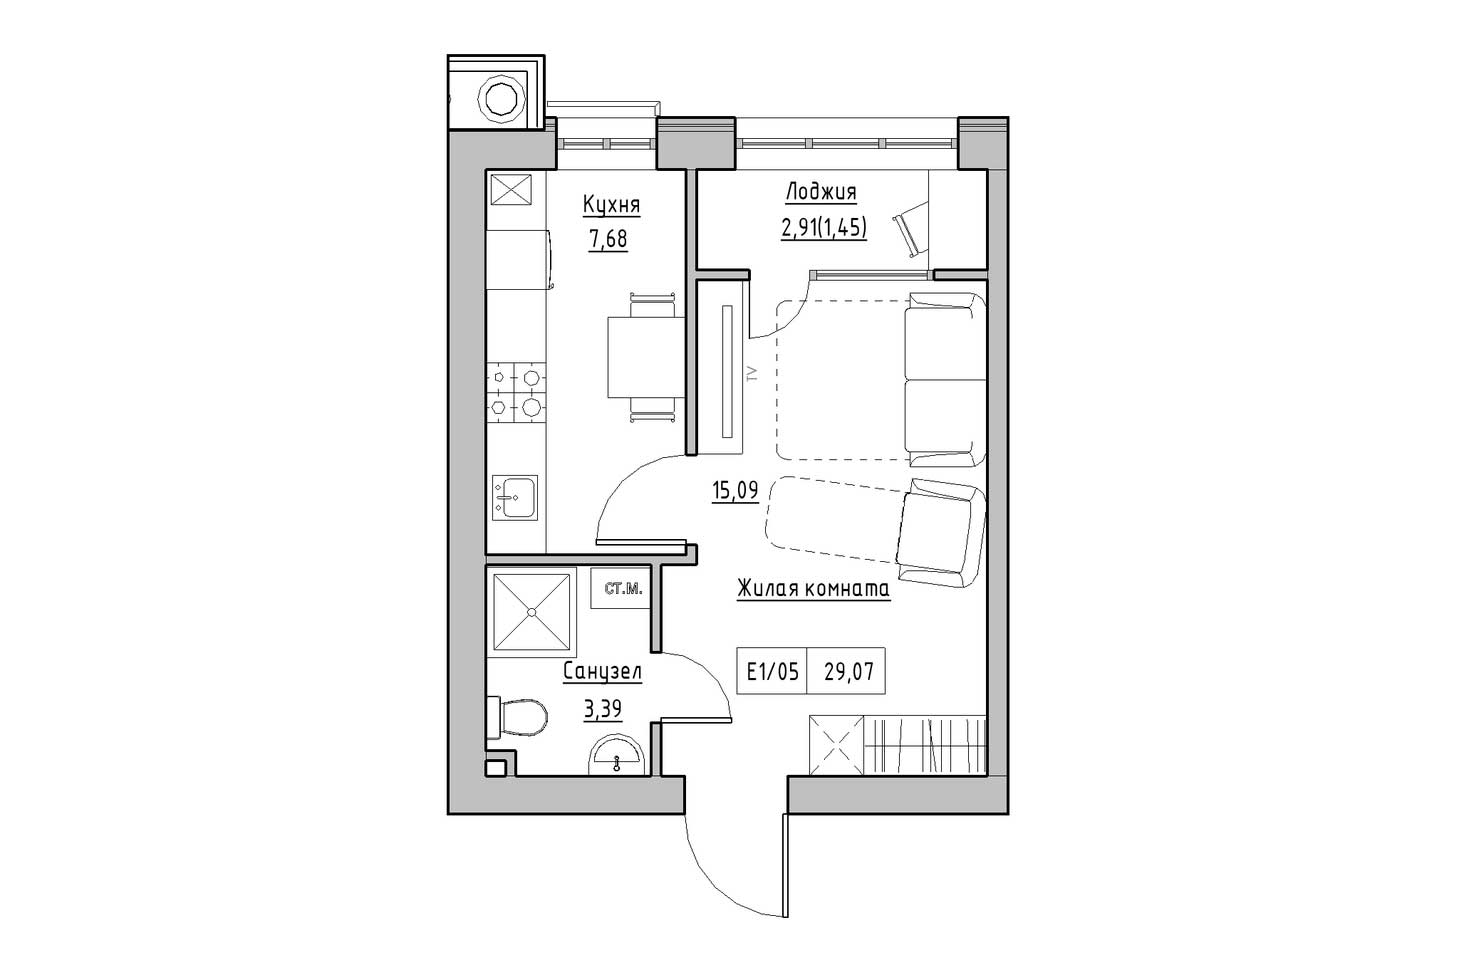 Planning 1-rm flats area 29.07m2, KS-009-03/0007.